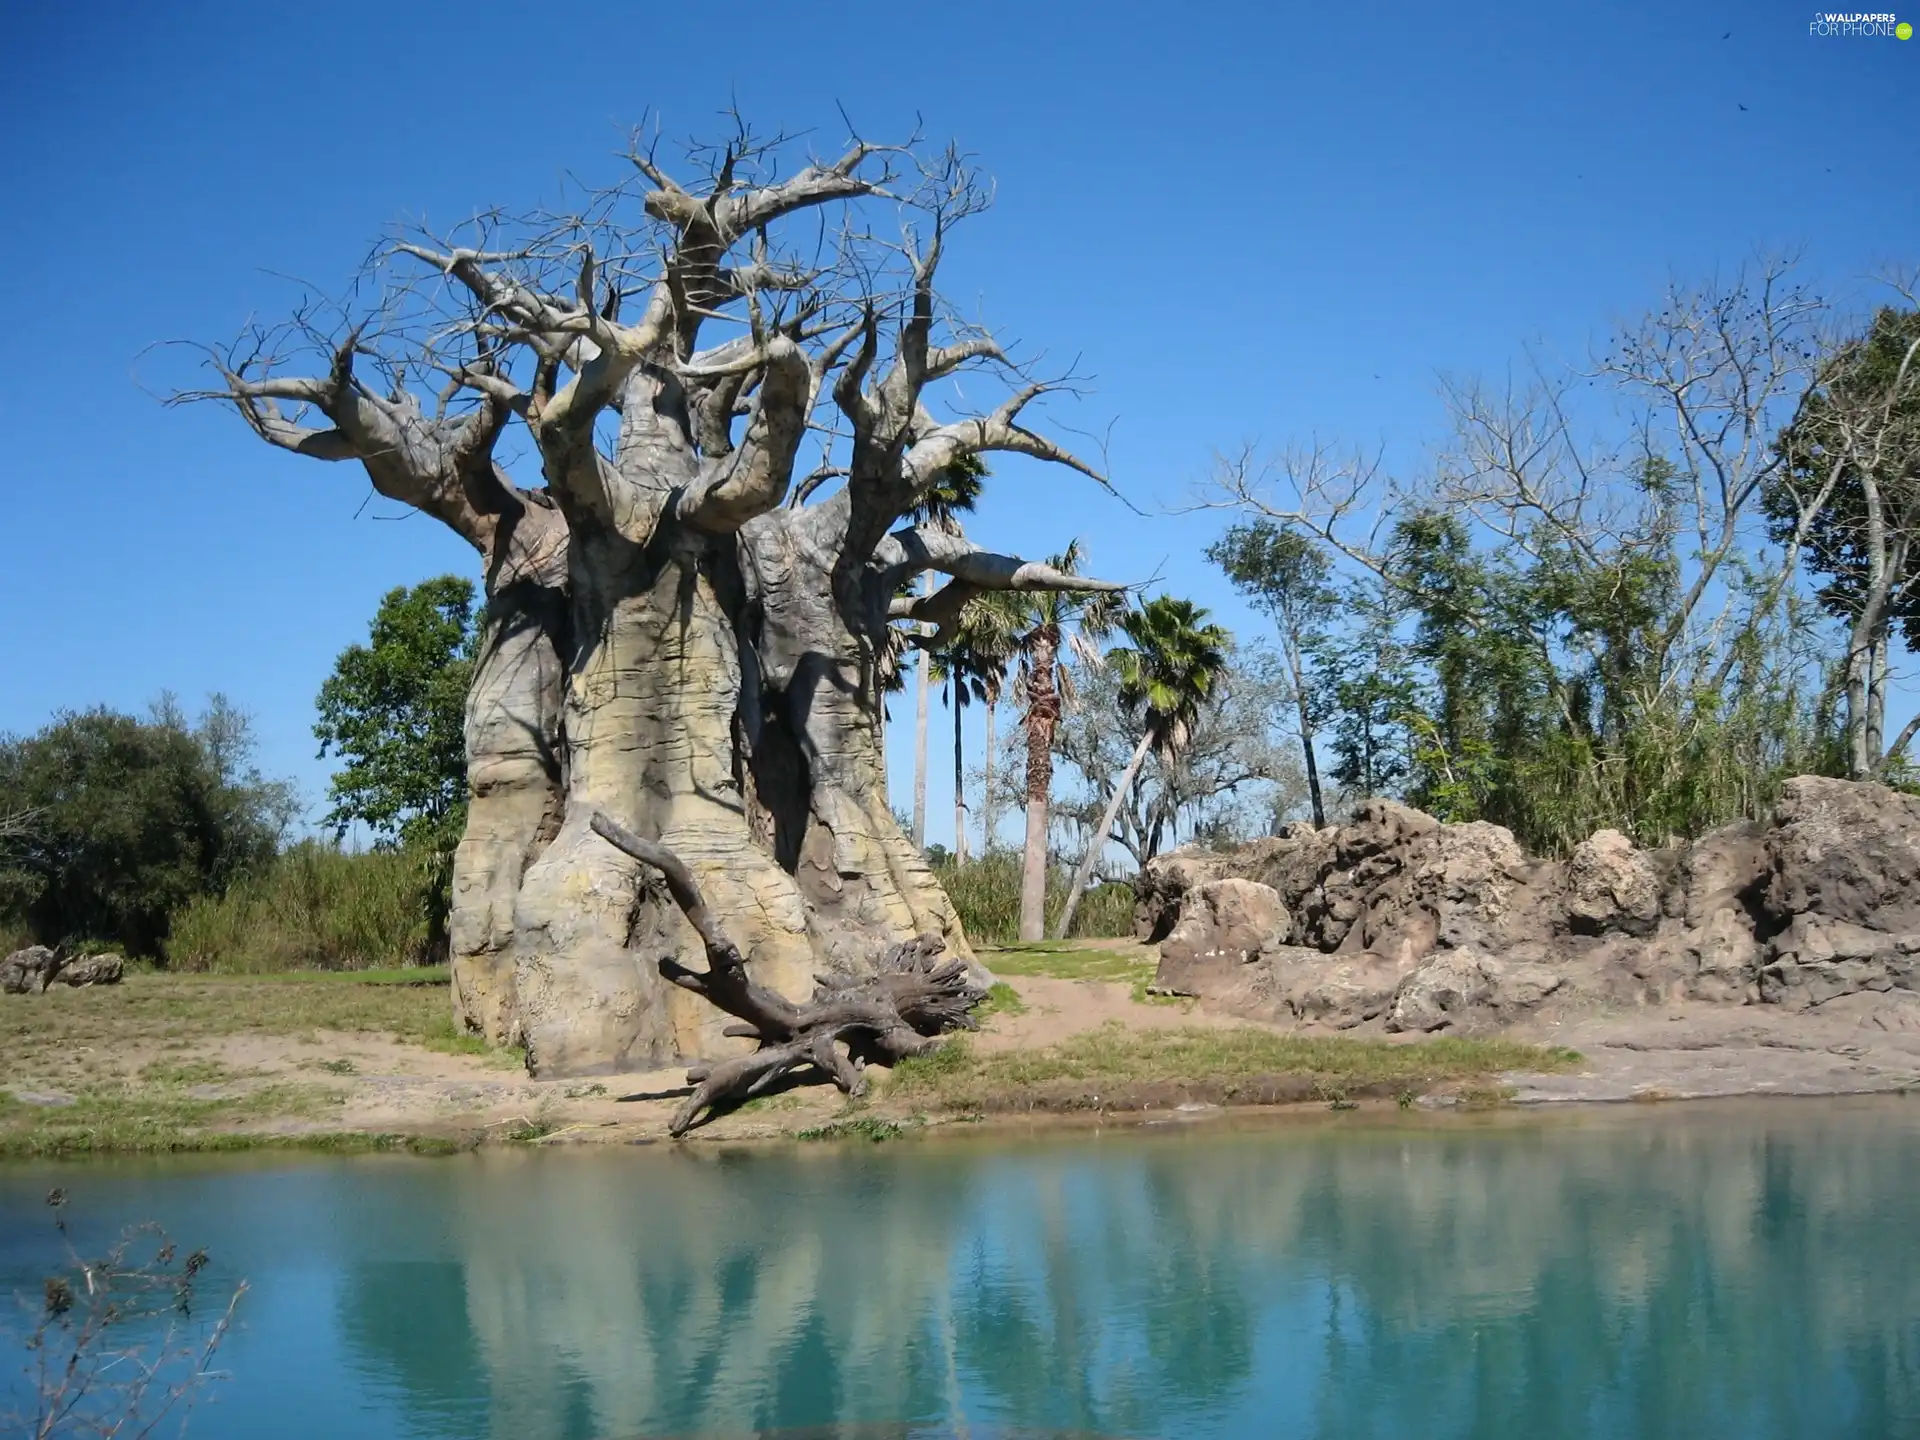 Baobab, trees, Stones rocks, Sky, River, viewes